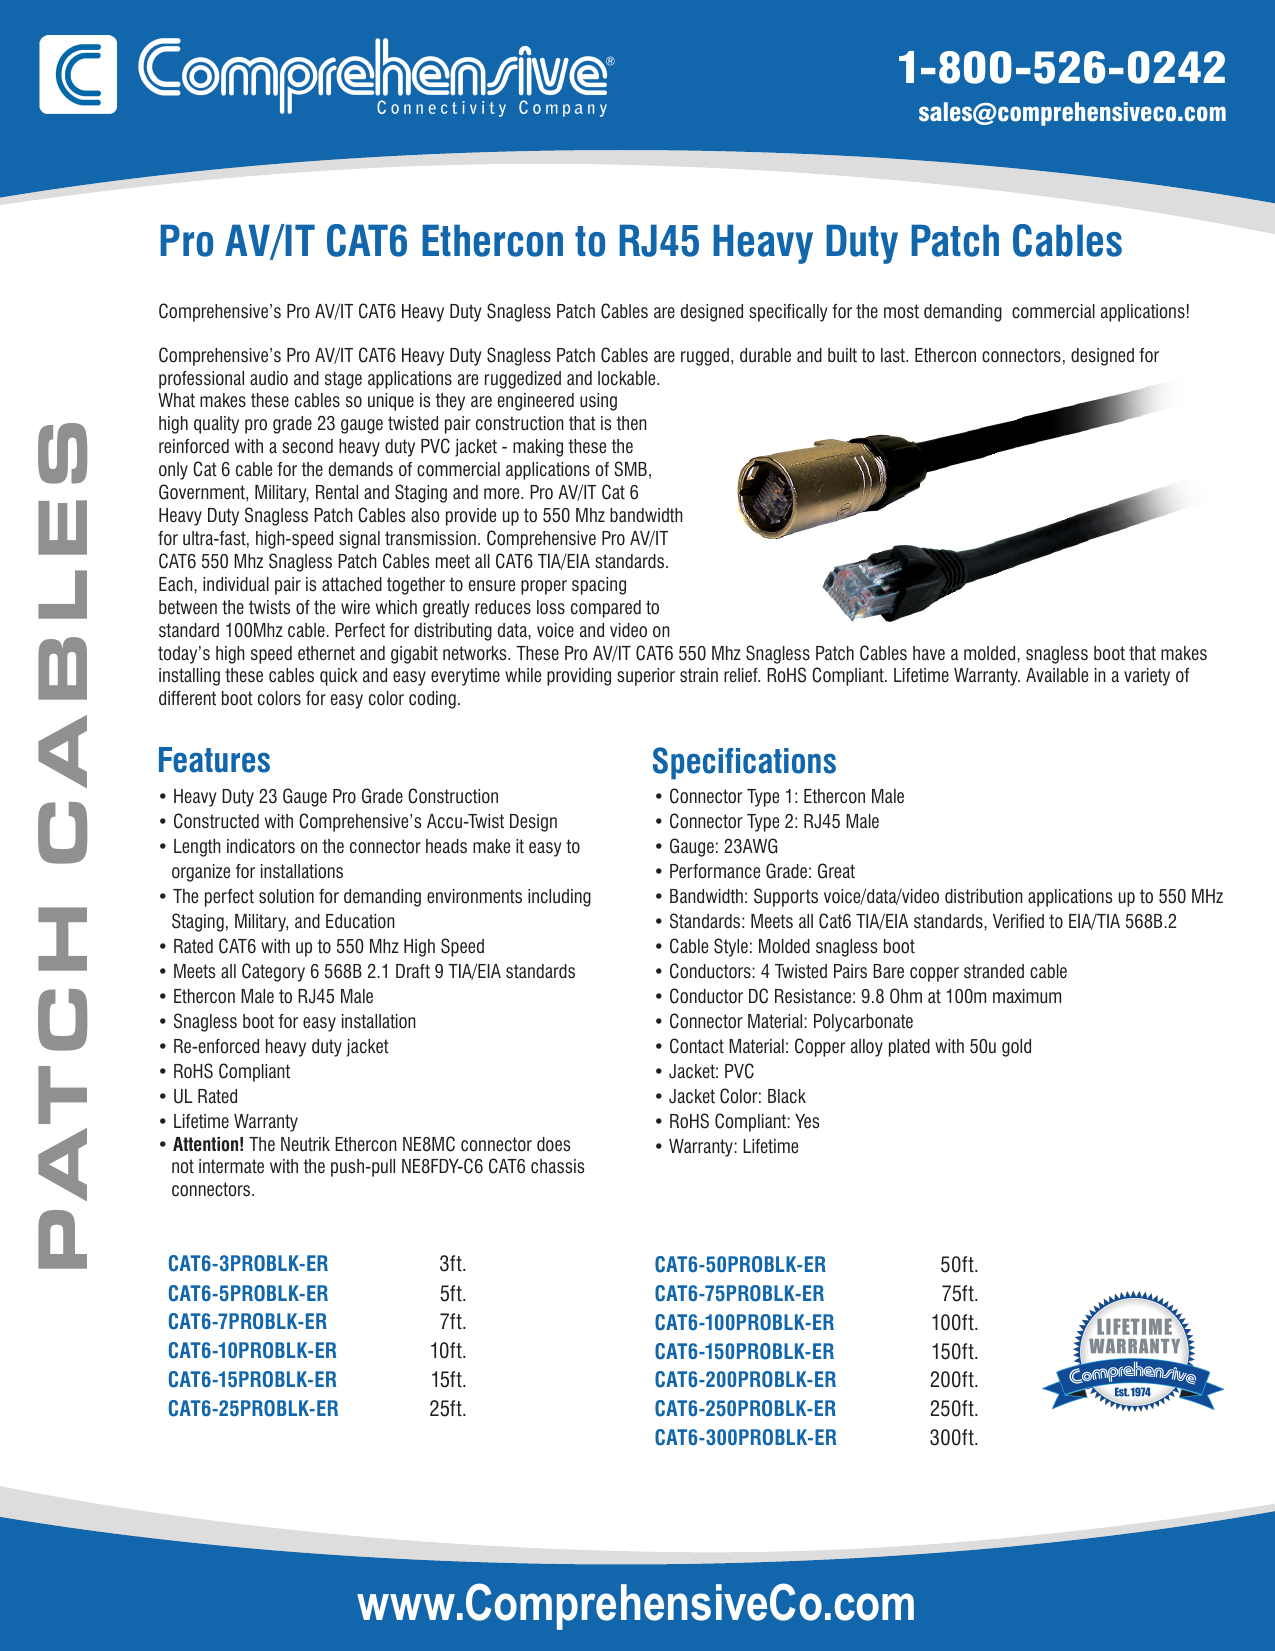 Comprehensive Cable CAT6-3PROBLK-ER 3FT PRO CAT6 ETHERCON RJ45 HEAVY DUTY SNAGLESS PATCH CABL 